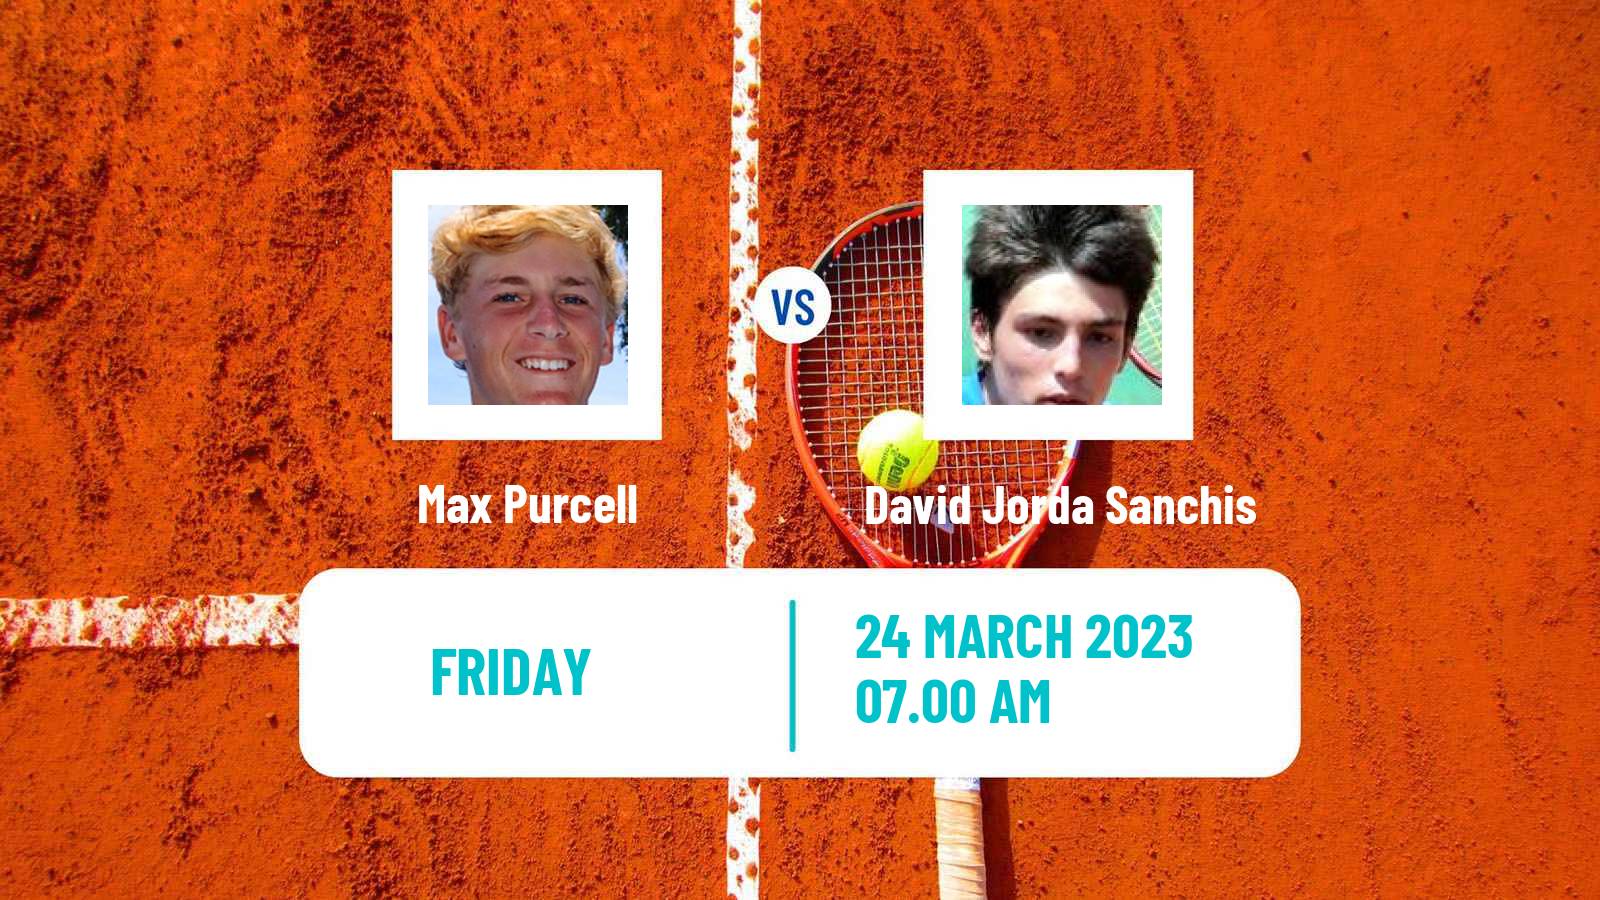 Tennis ATP Challenger Max Purcell - David Jorda Sanchis